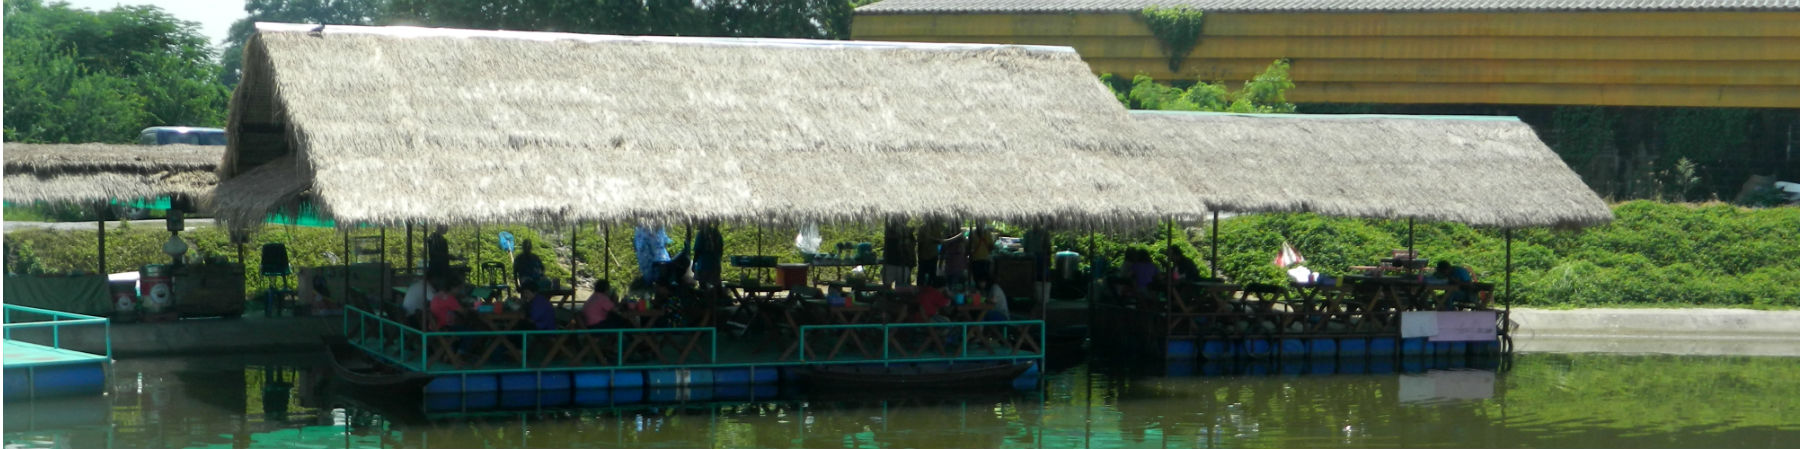 Site of Dvaravati U Thong Ancient Town Floating Market, U Thong District, Suphanburi Province